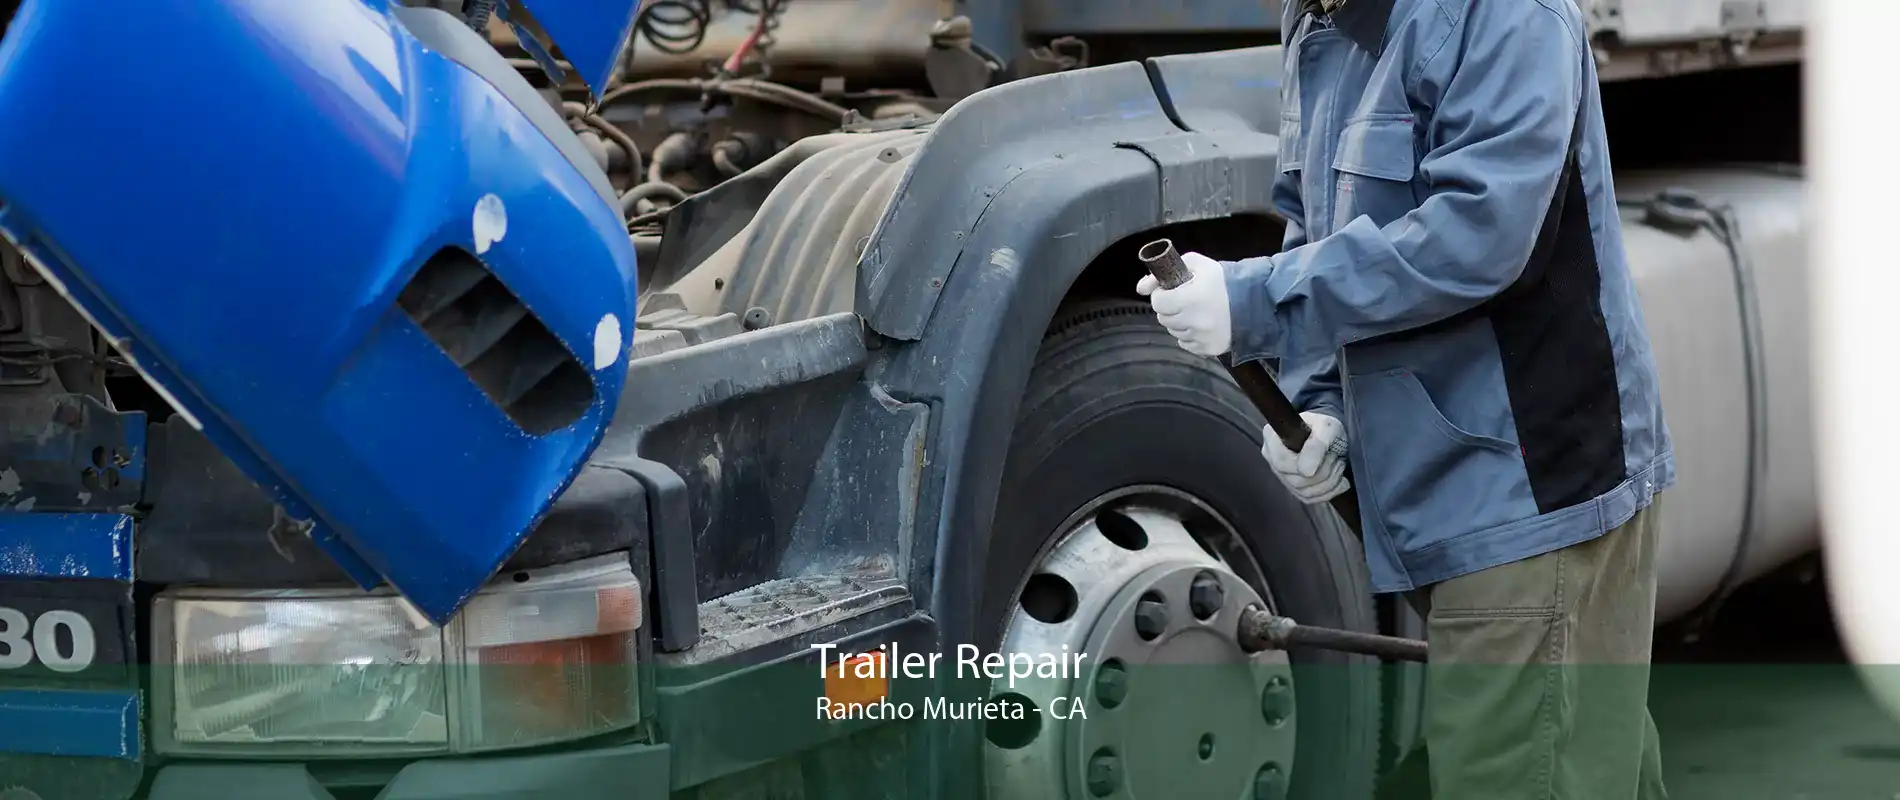 Trailer Repair Rancho Murieta - CA